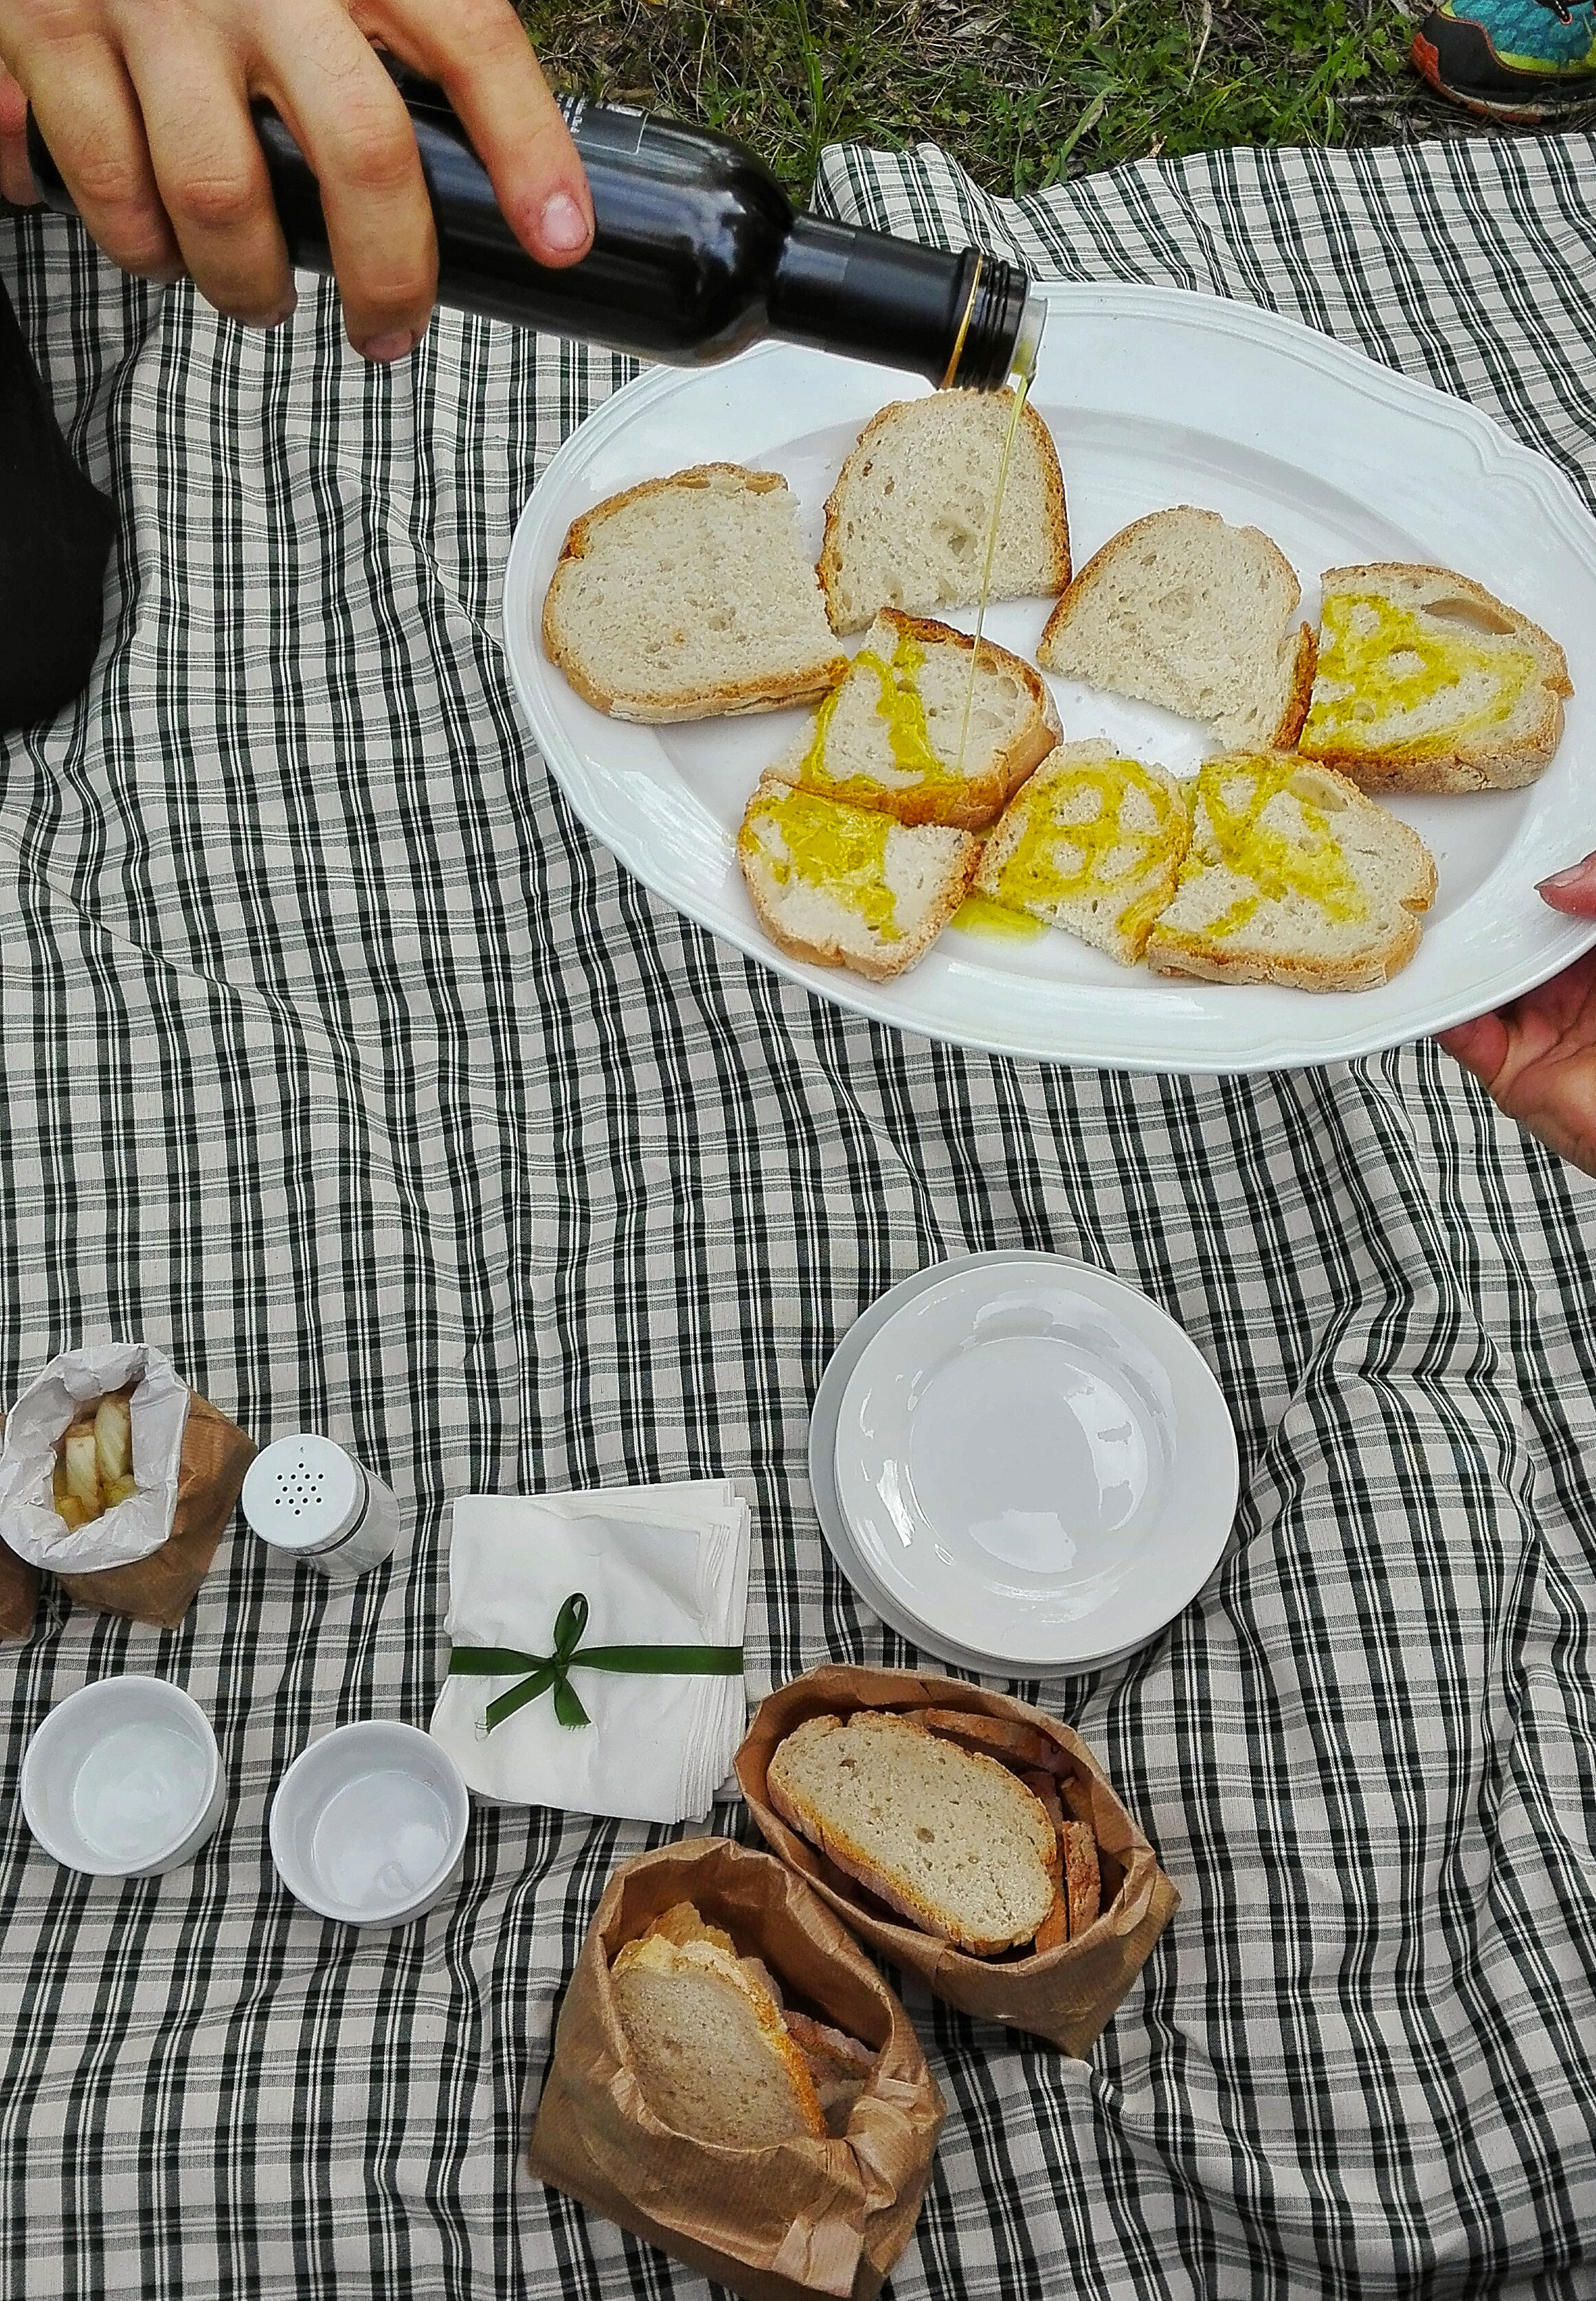 picnic in Chianti countryside with bruschetta